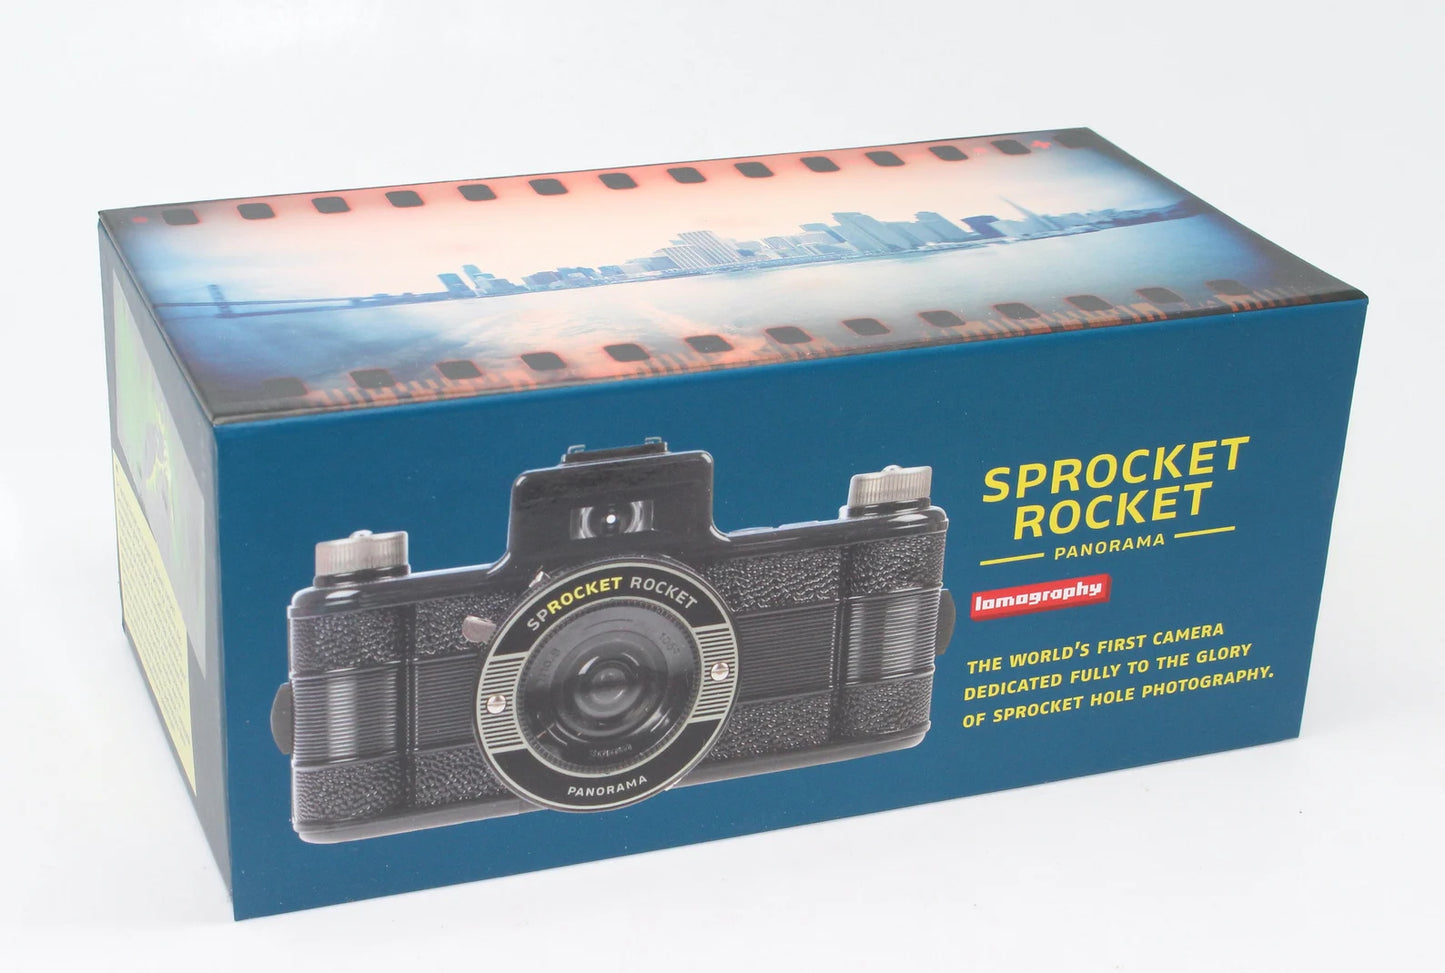 Lomography Sprocket Rocket 35mm Film Panoramic Camera